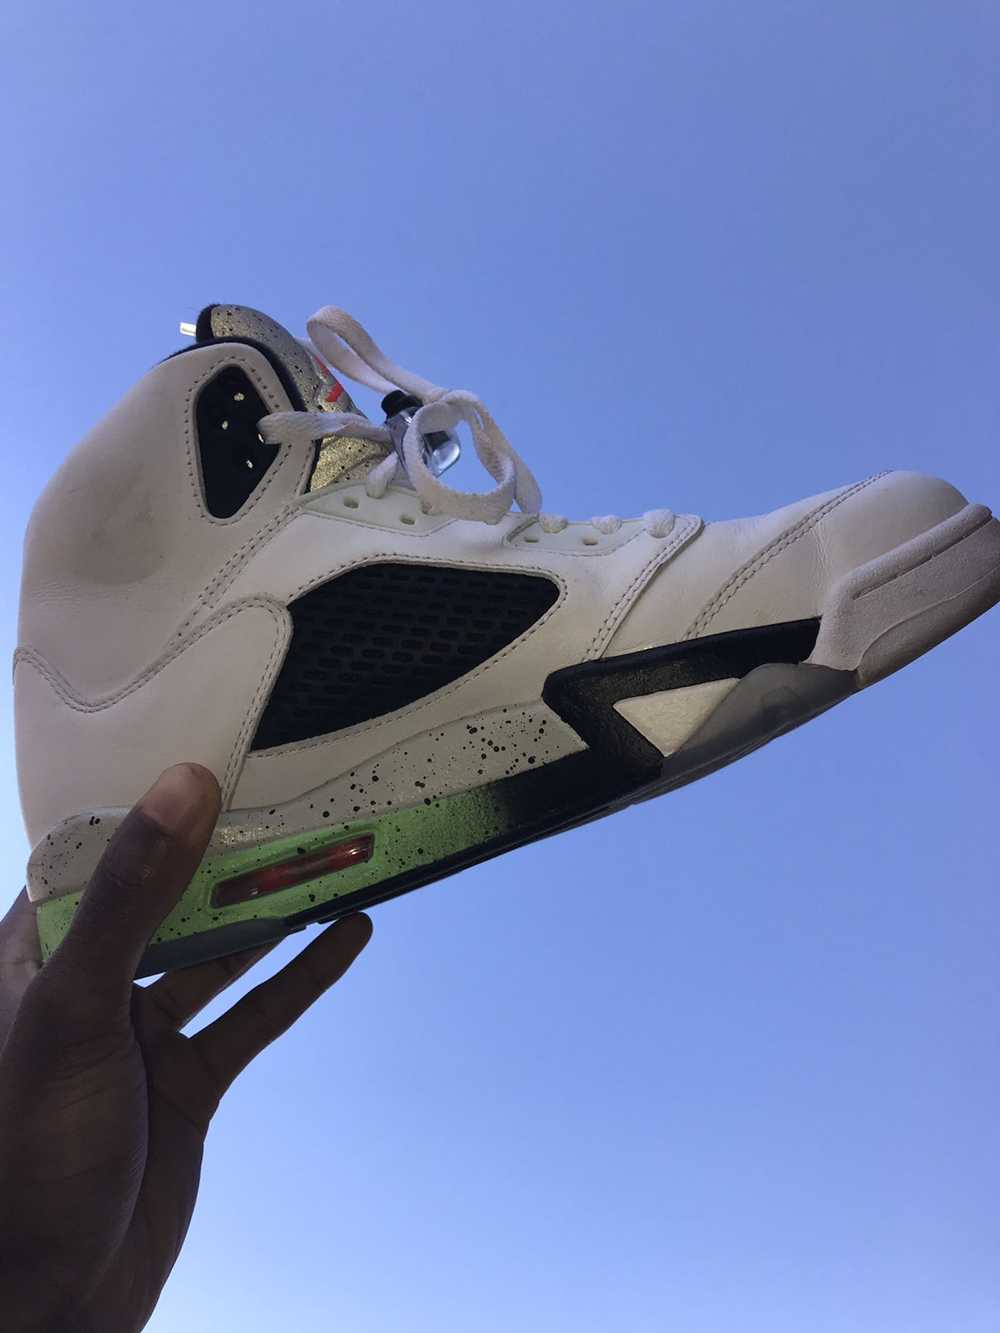 Sneakers Release – Jordan 5 Retro “Alternate Bel-Air”  White/Ghost Green/